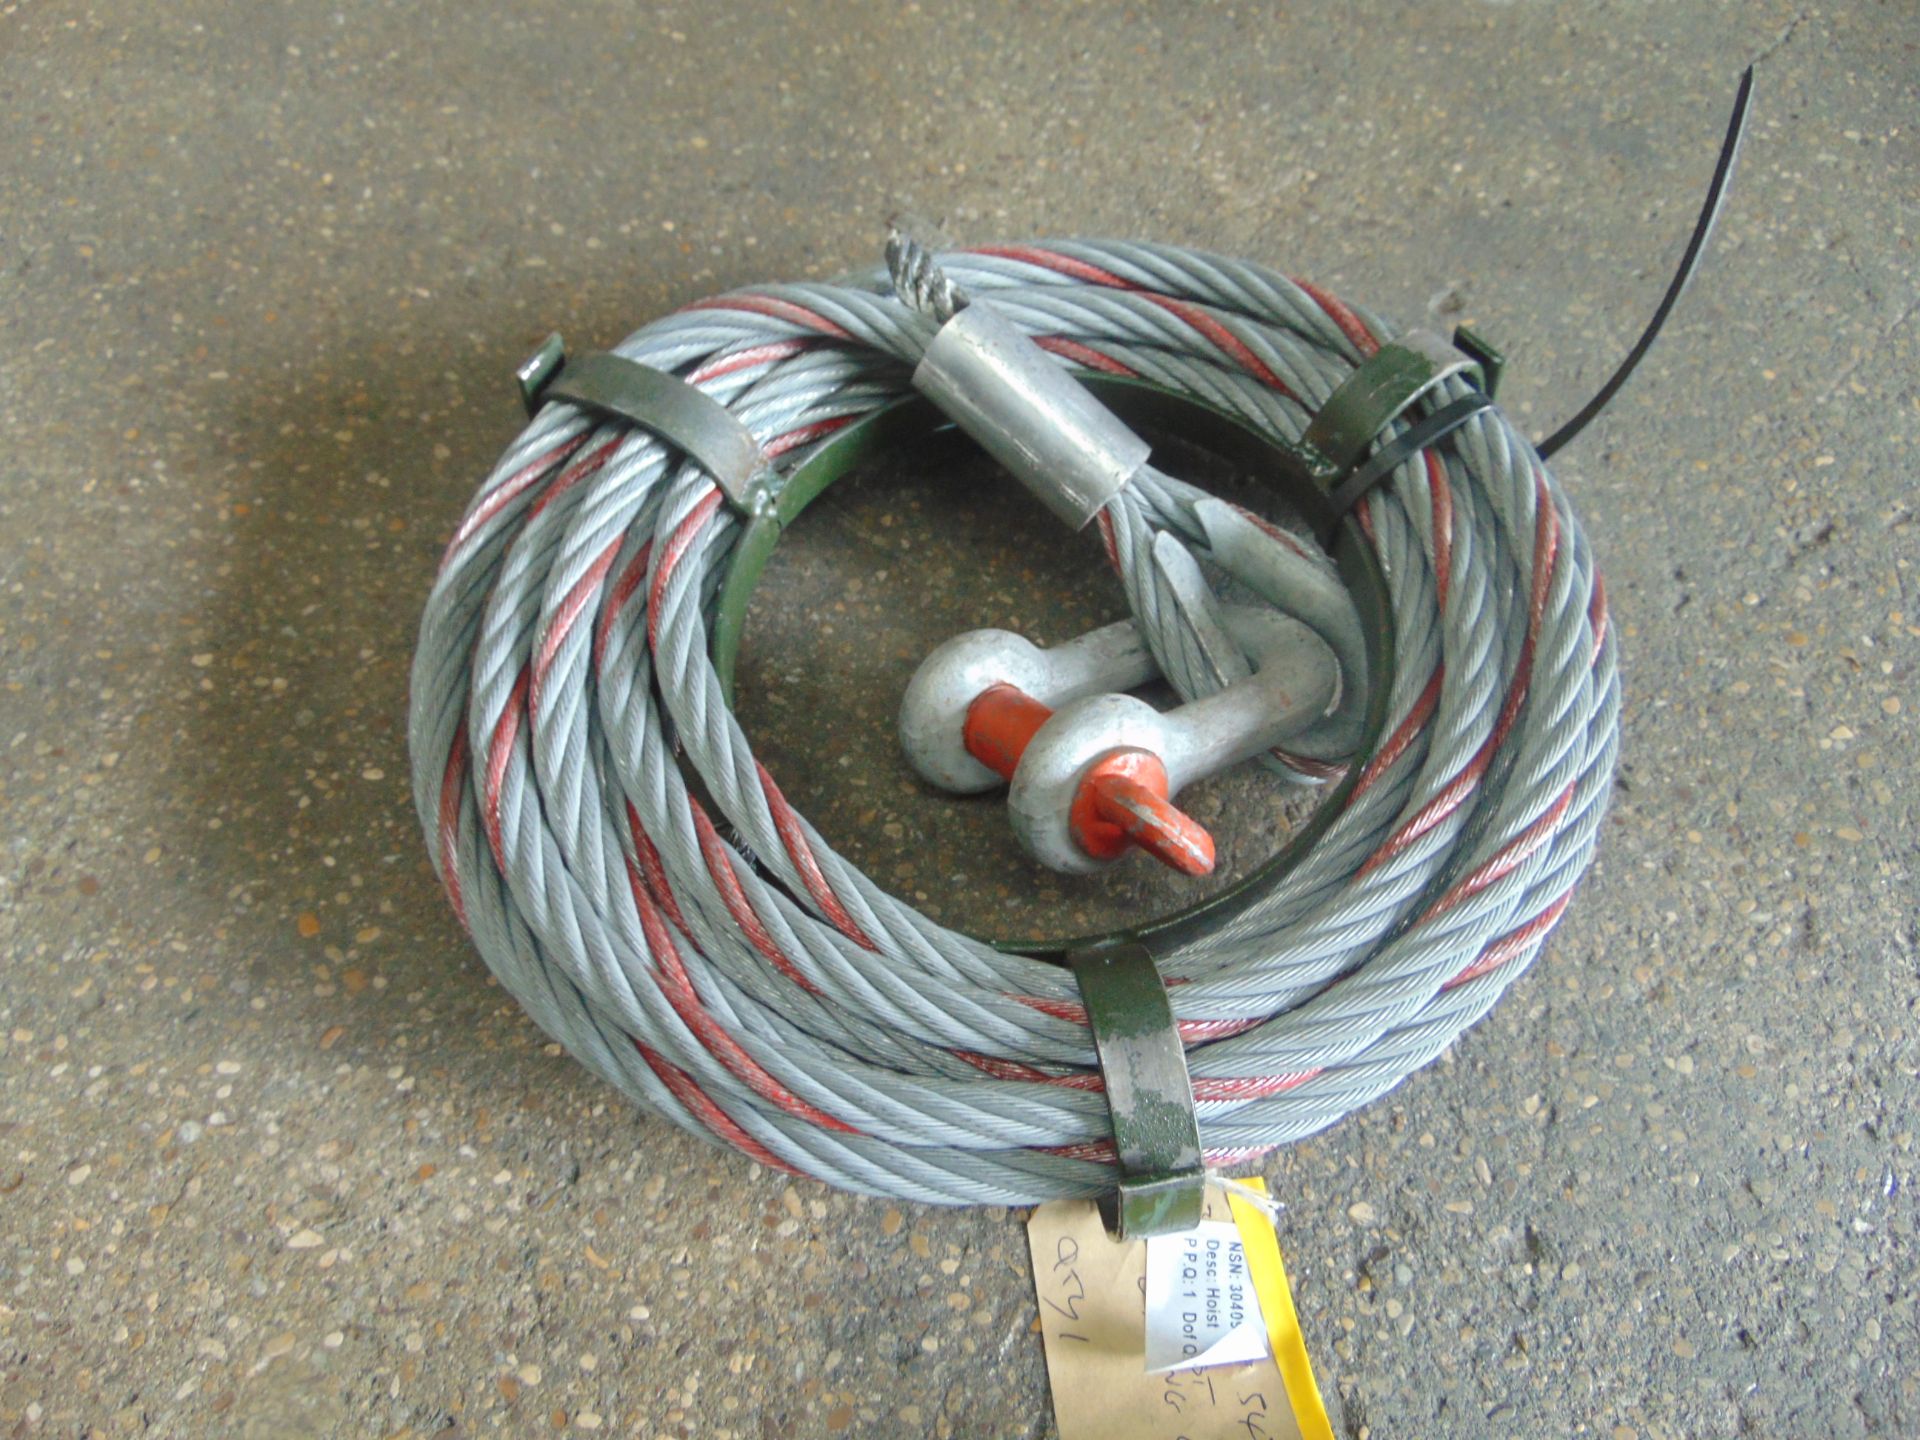 10m of 3T Wire Winch/Hoist Rope